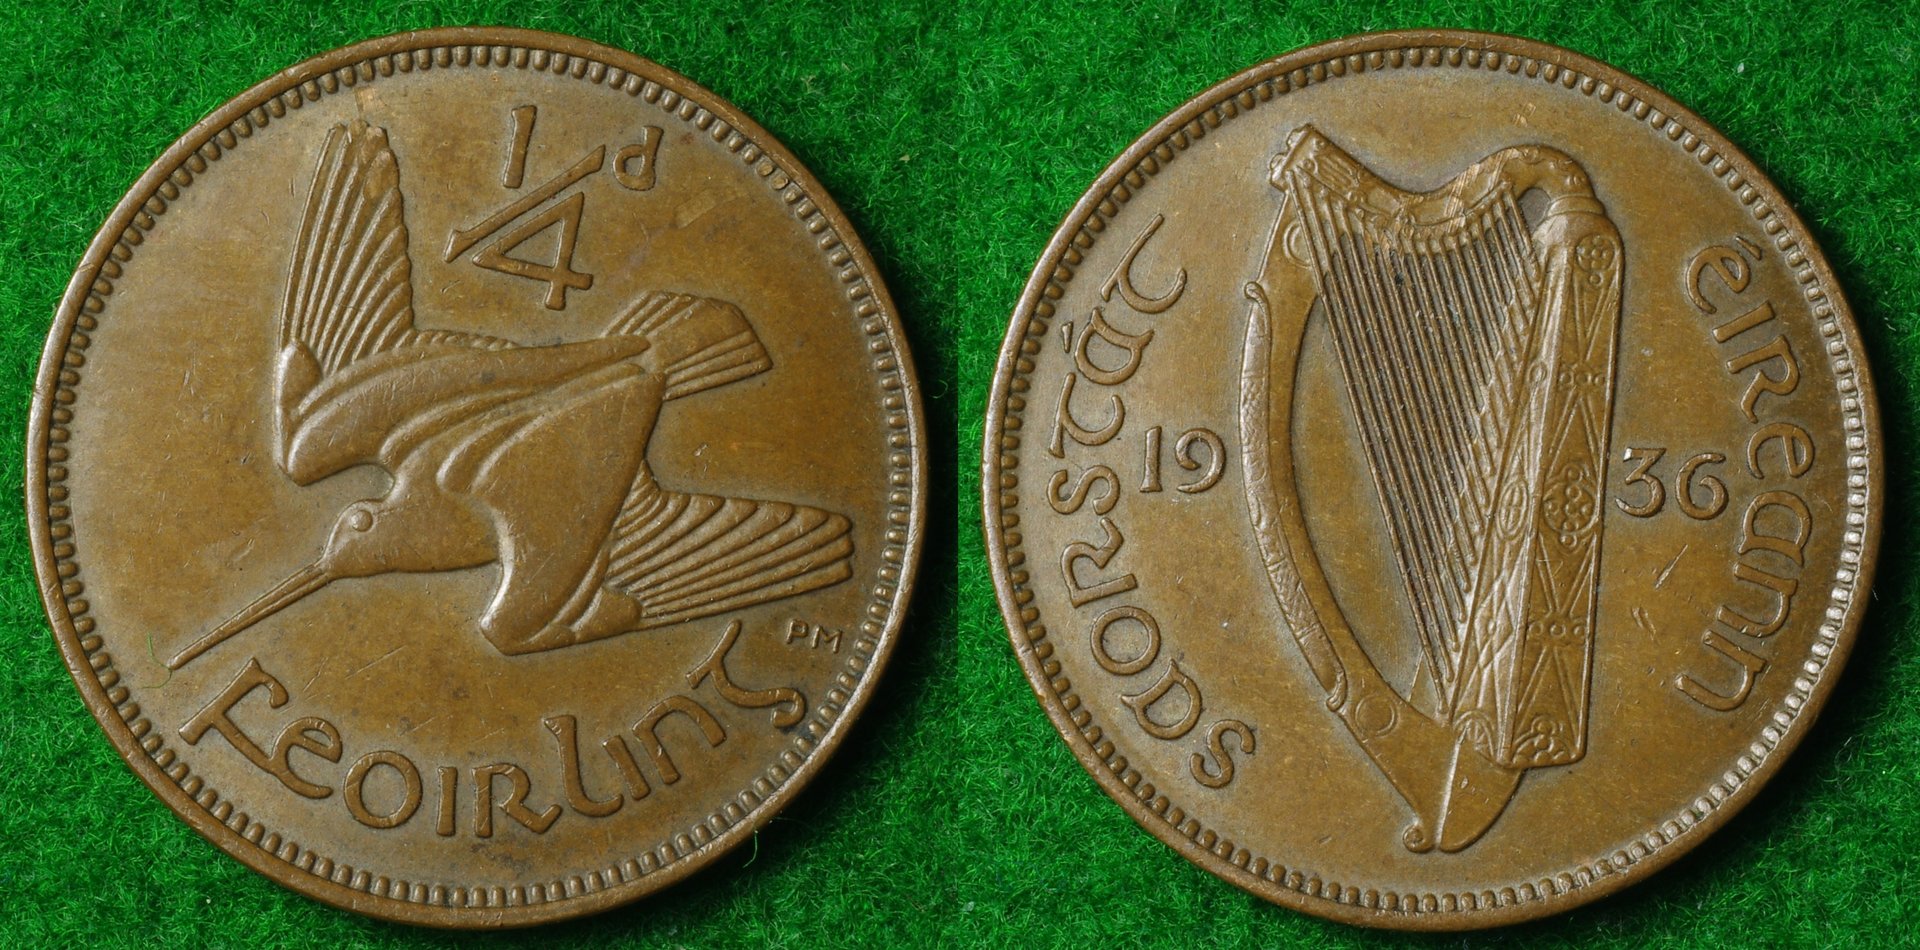 Ireland 1936 F 2-horz.jpg